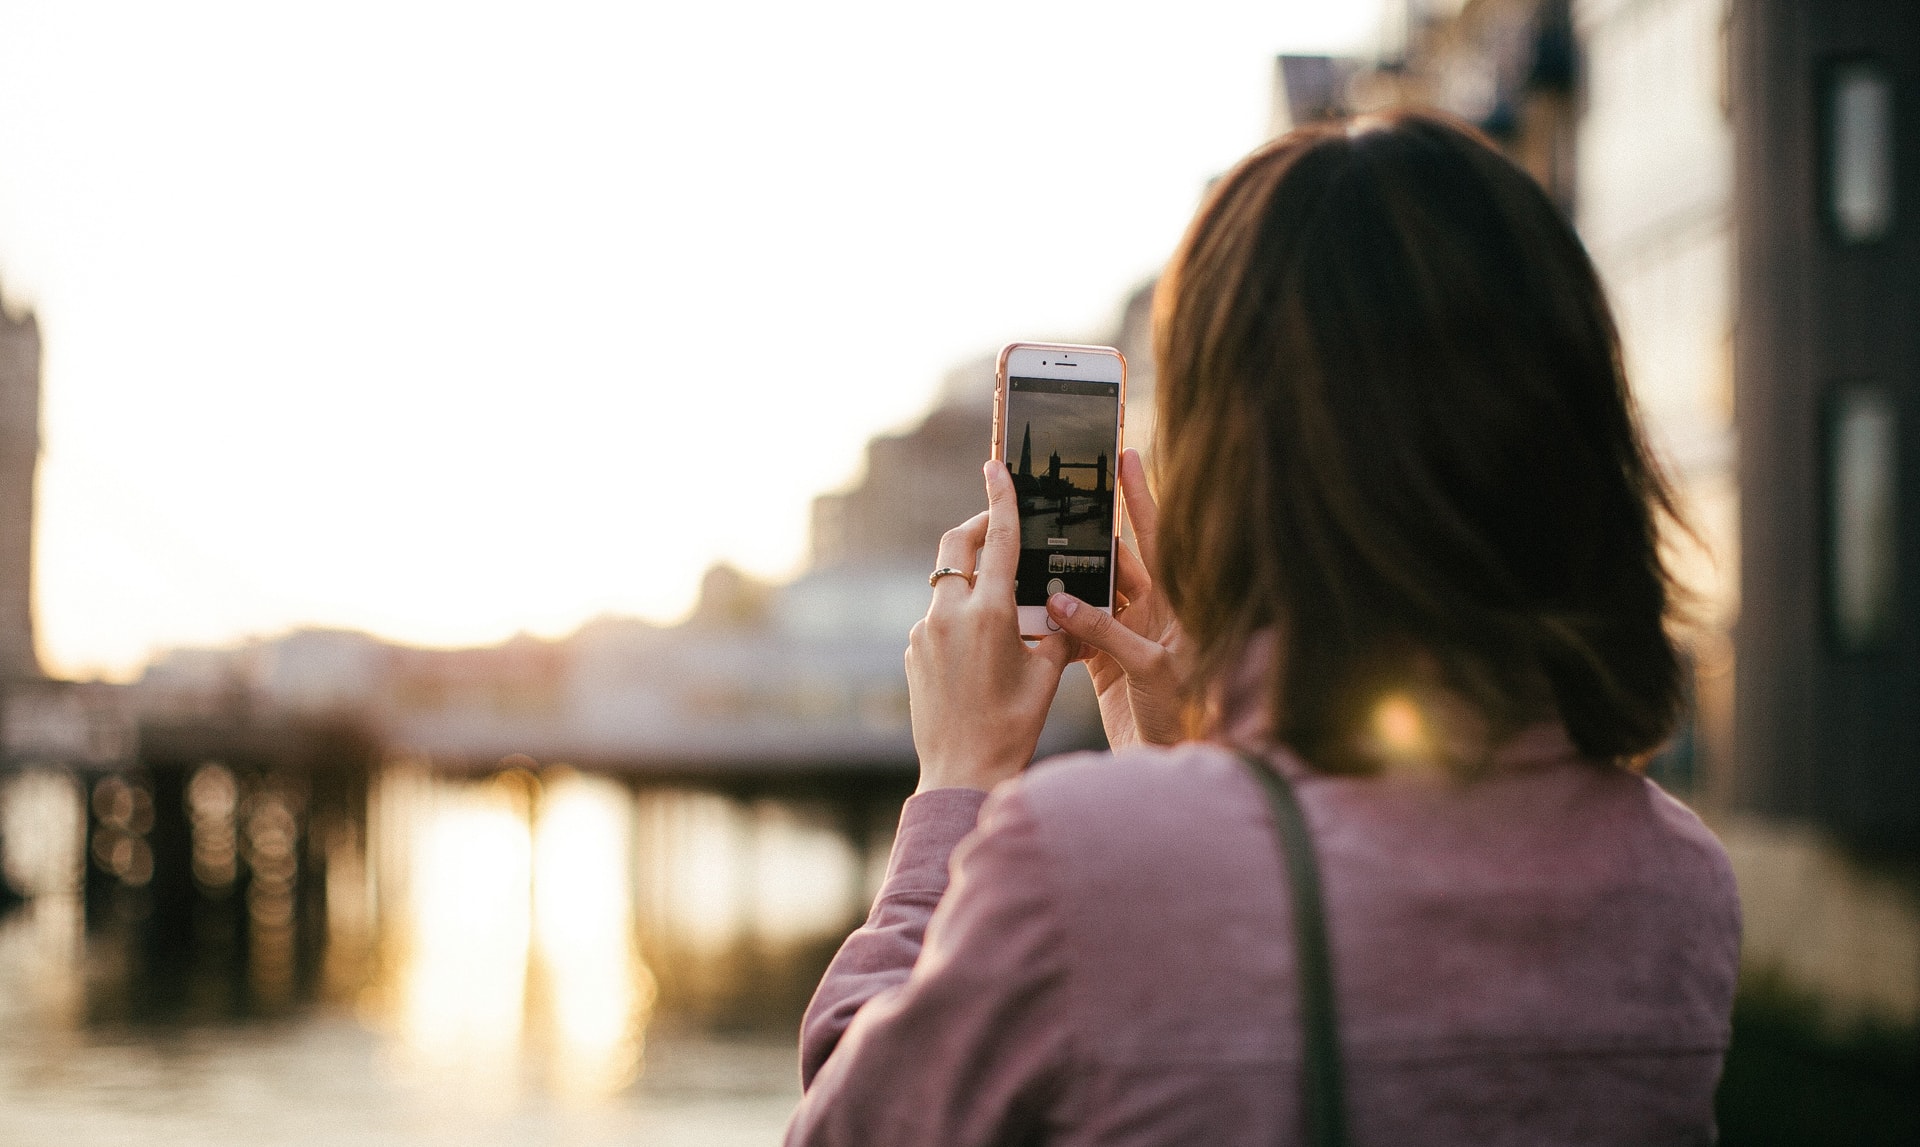 Tourist taking a photo of a landmark on their phone